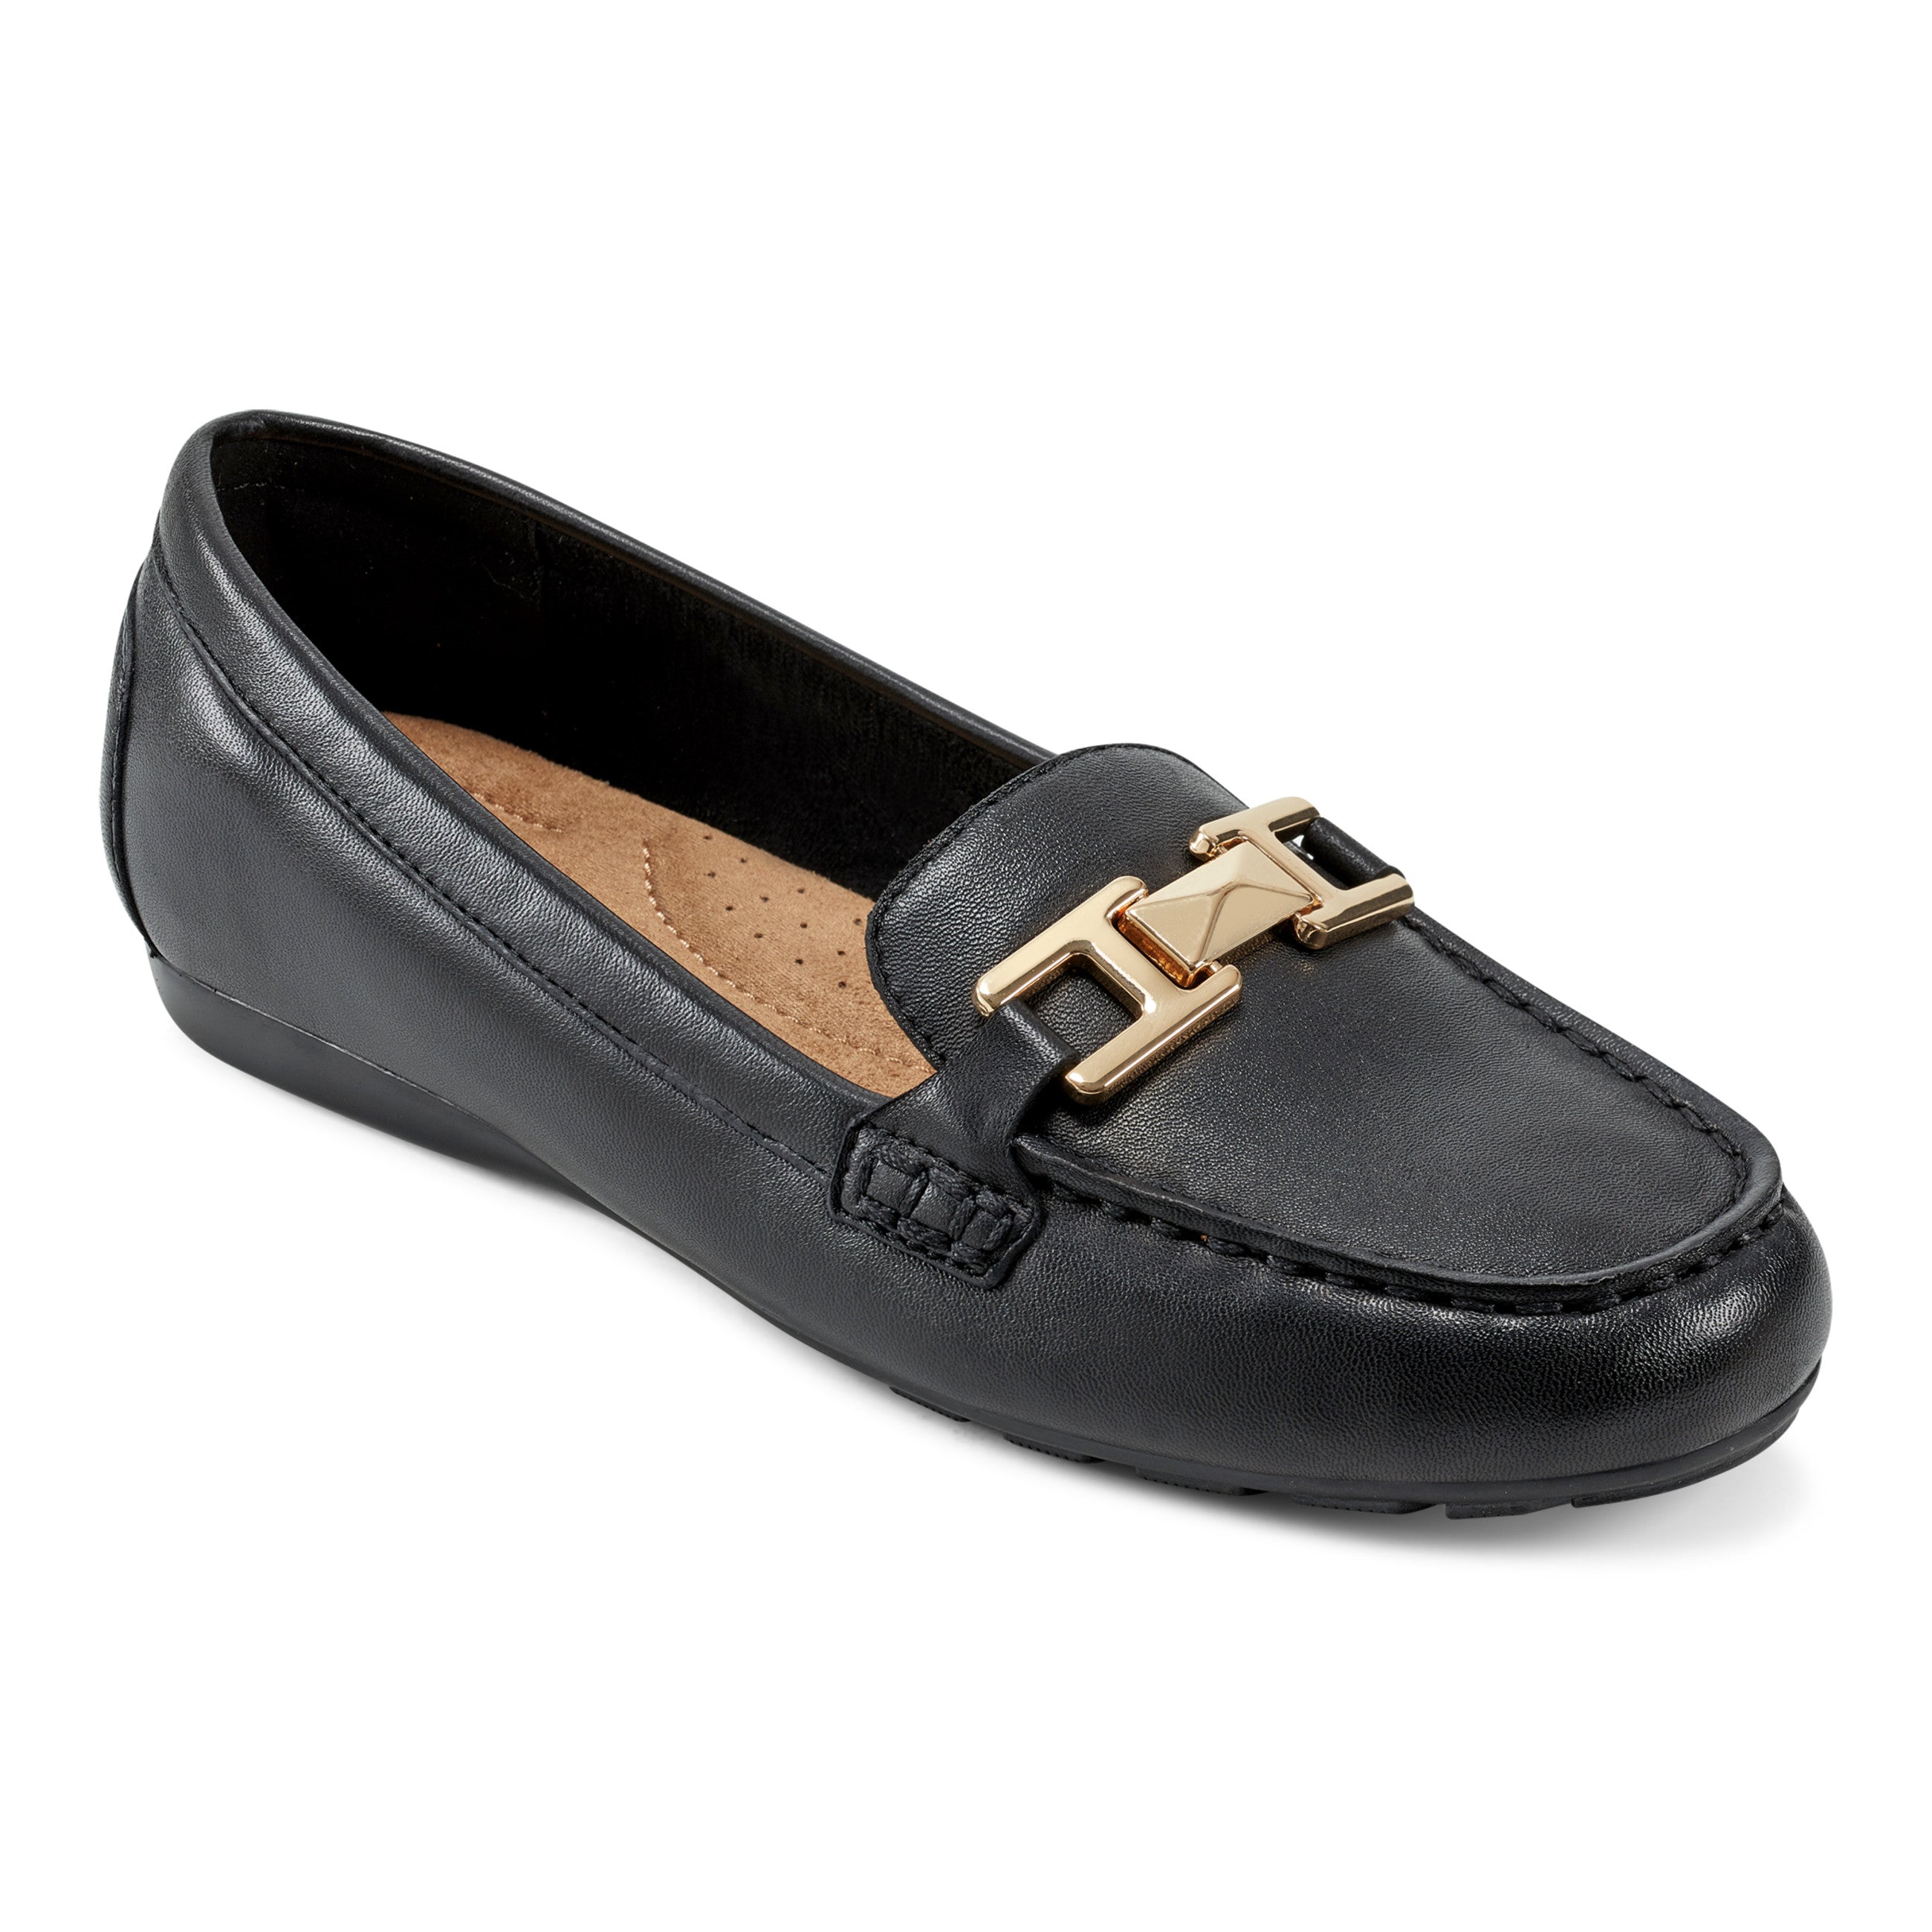 Authentic Louis Vuitton Men's Black Calf Leather Buckle Loafers Dress Shoes  UK size 6 (US size 7)